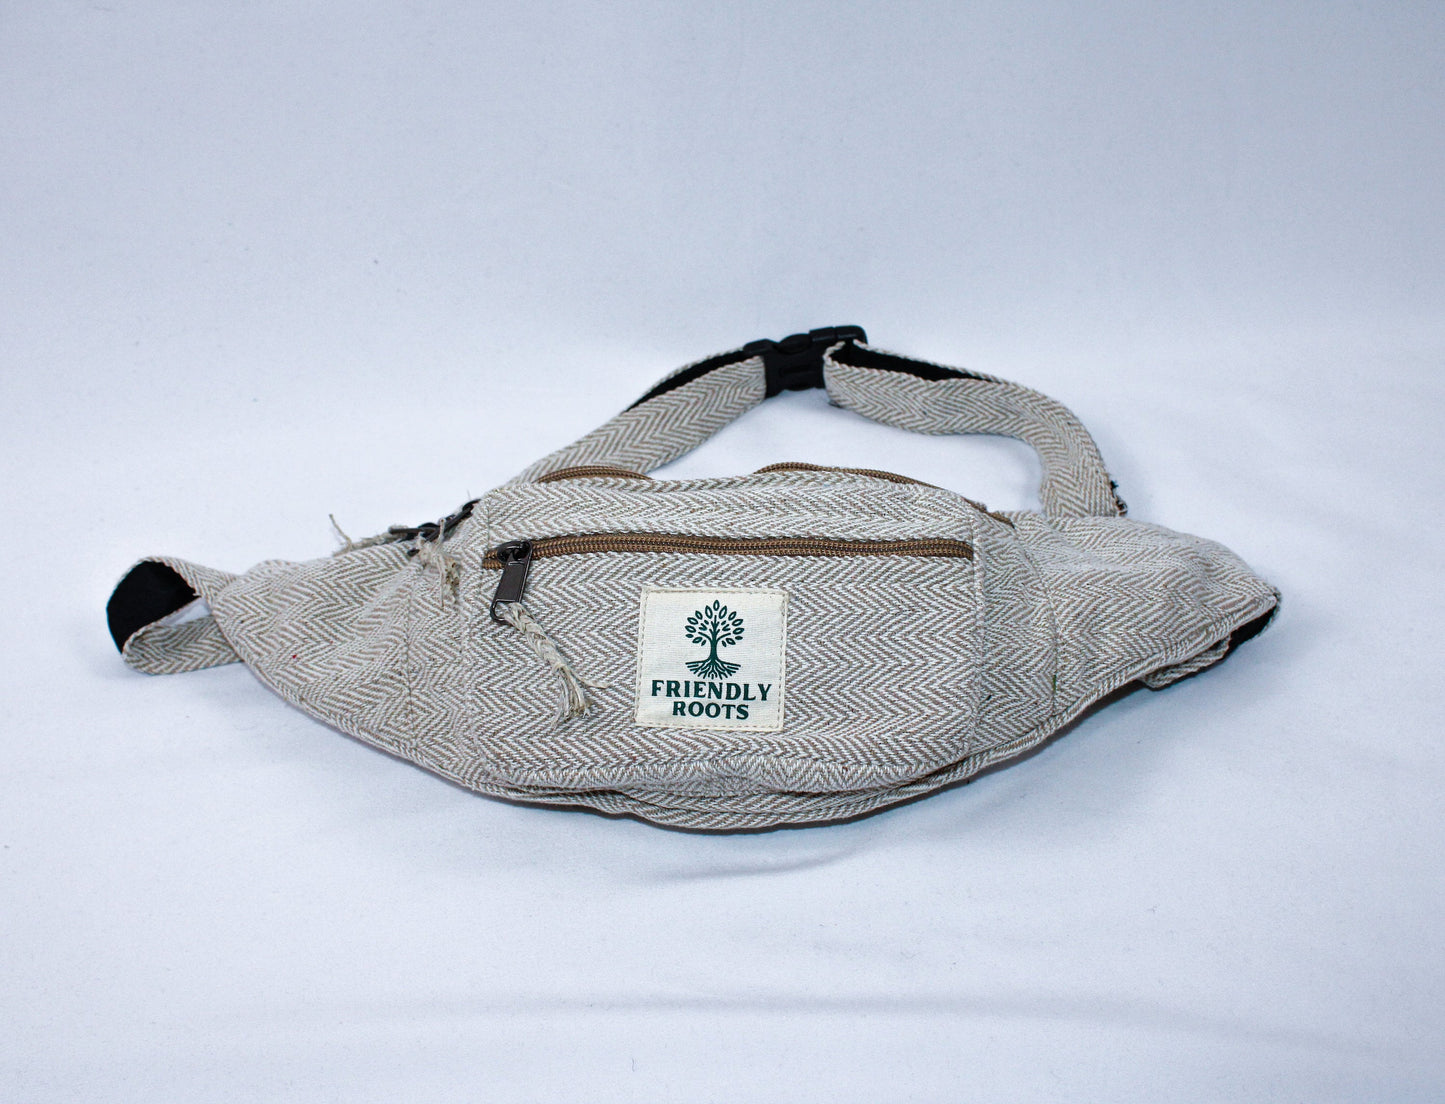 Handmade Eco-Friendly Fanny Pack, money belt - Hemp & Cotton Bum Bag, Adjustable Shoulder Strap, Hippie Festival Bag, Sustainable Accessory